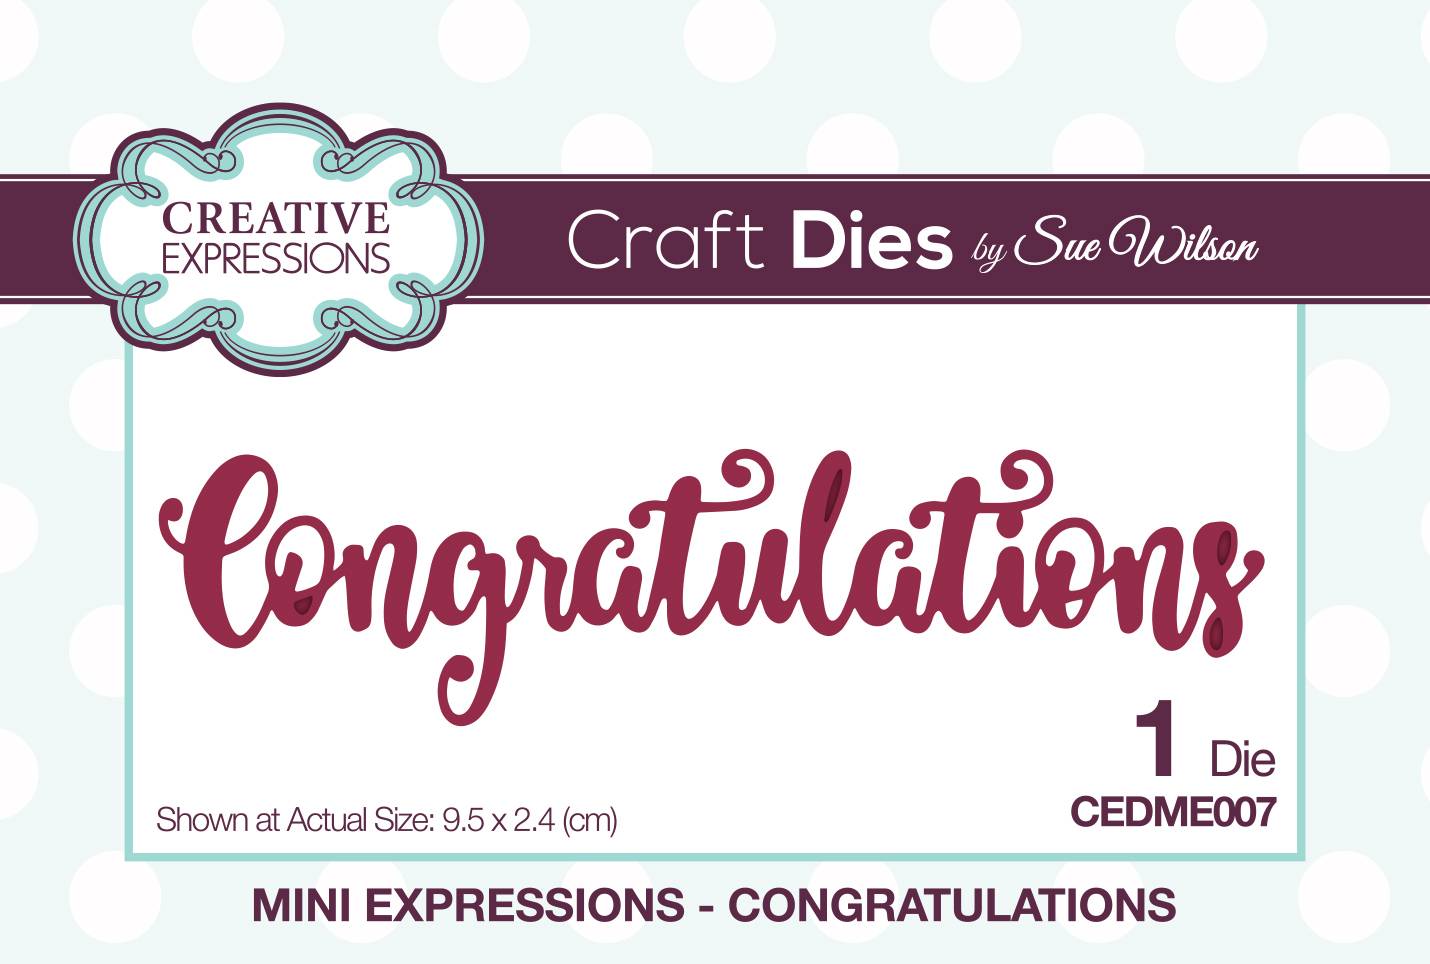 Sue Wilson Mini Expressions Congratulations Craft Die